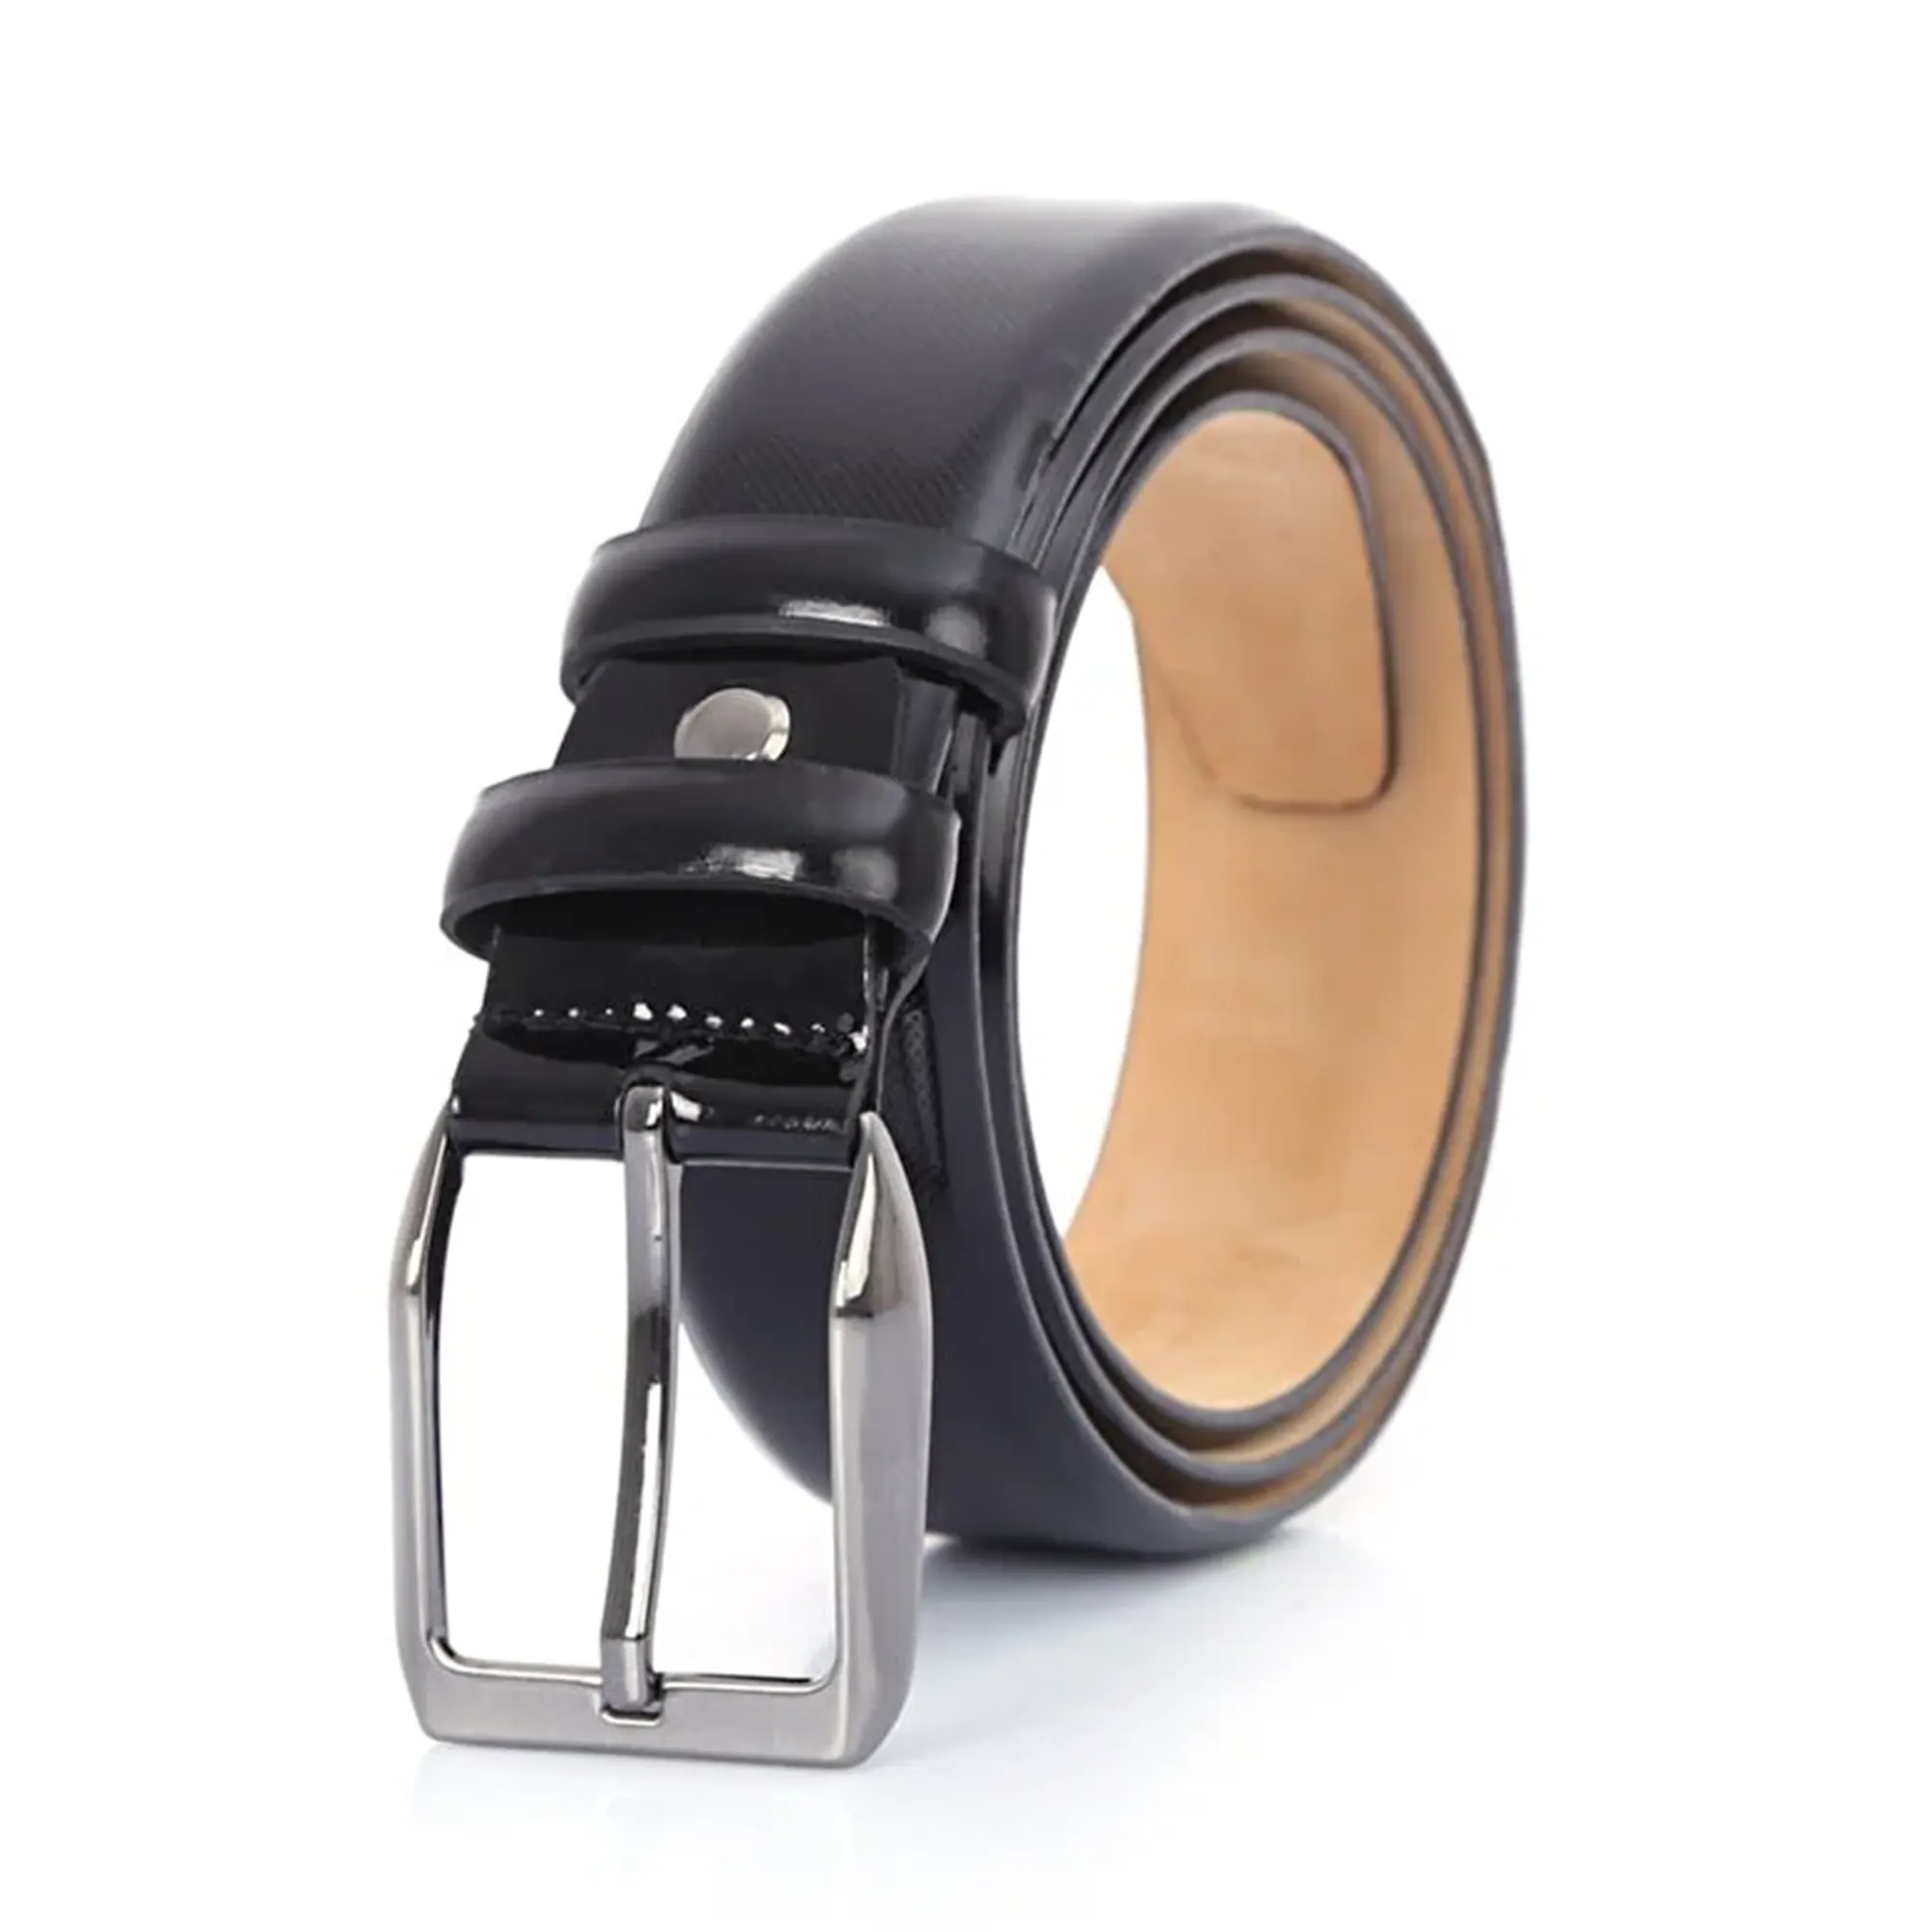 Buy Black Patent Leather Belt Dotted Texture - LeatherBeltsOnline.com